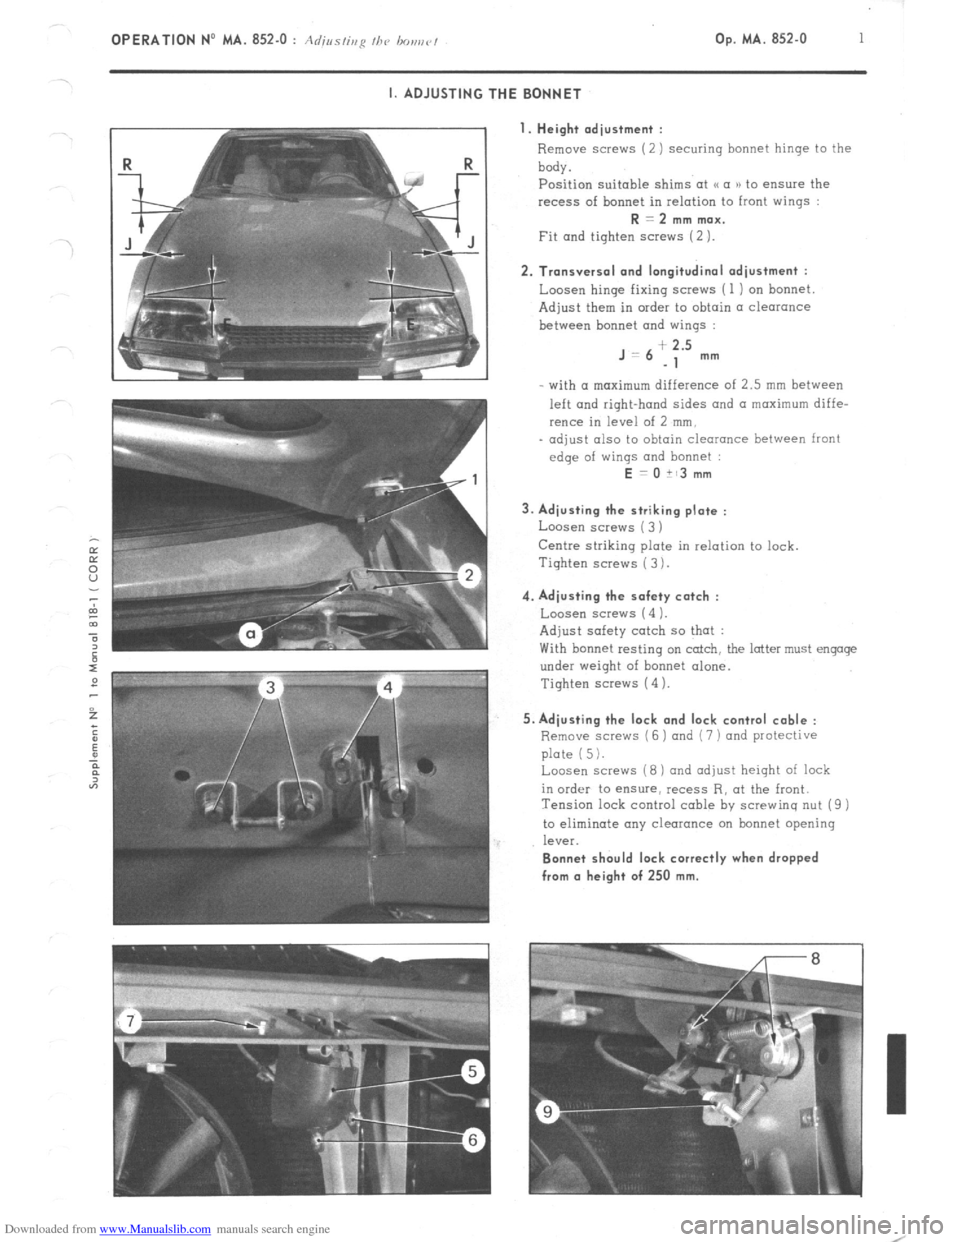 Citroen CX 1981 1.G Service Manual Downloaded from www.Manualslib.com manuals search engine OPERATION No MA. 852-O : Adius/ir,y I/><, bo,,r,r/ Op. MA. 852-O 1 
~. 
I. ADJUSTING THE BONNET 
I. Height adjustment : 
Remove screws (2) secu